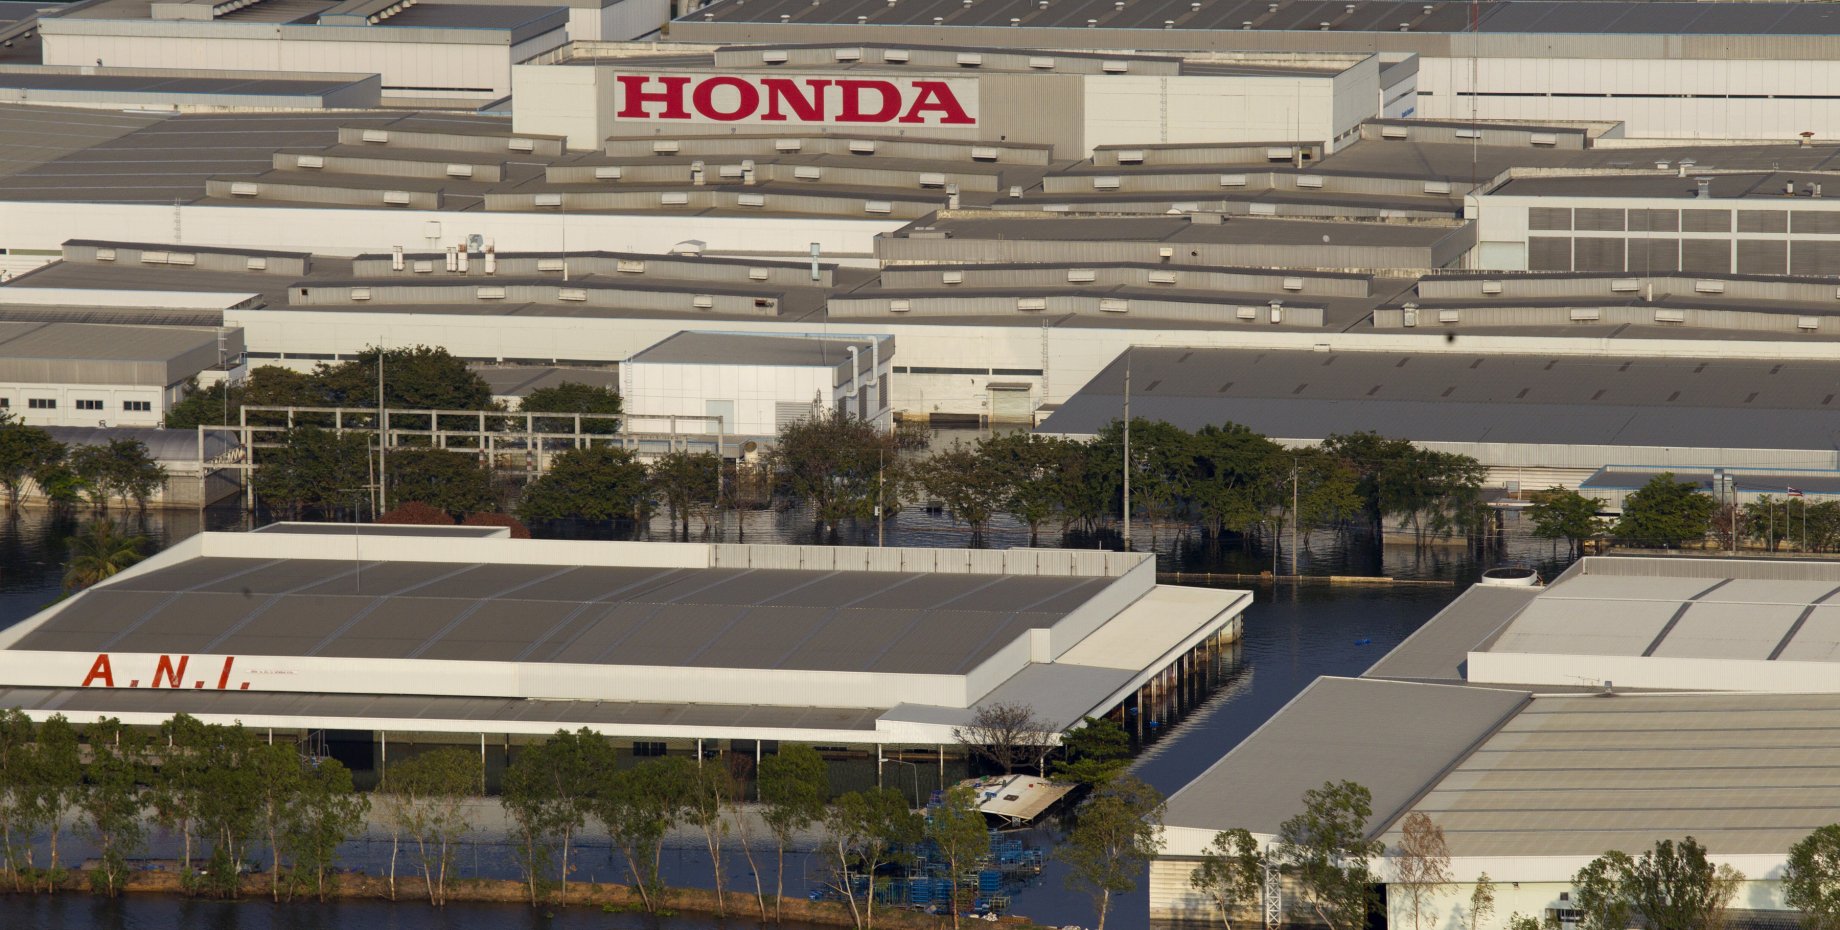 Завод honda. Завод Хонда в Японии. Штаб квартира Хонда в Японии. Первый завод Хонда в США. Завод Honda в США.